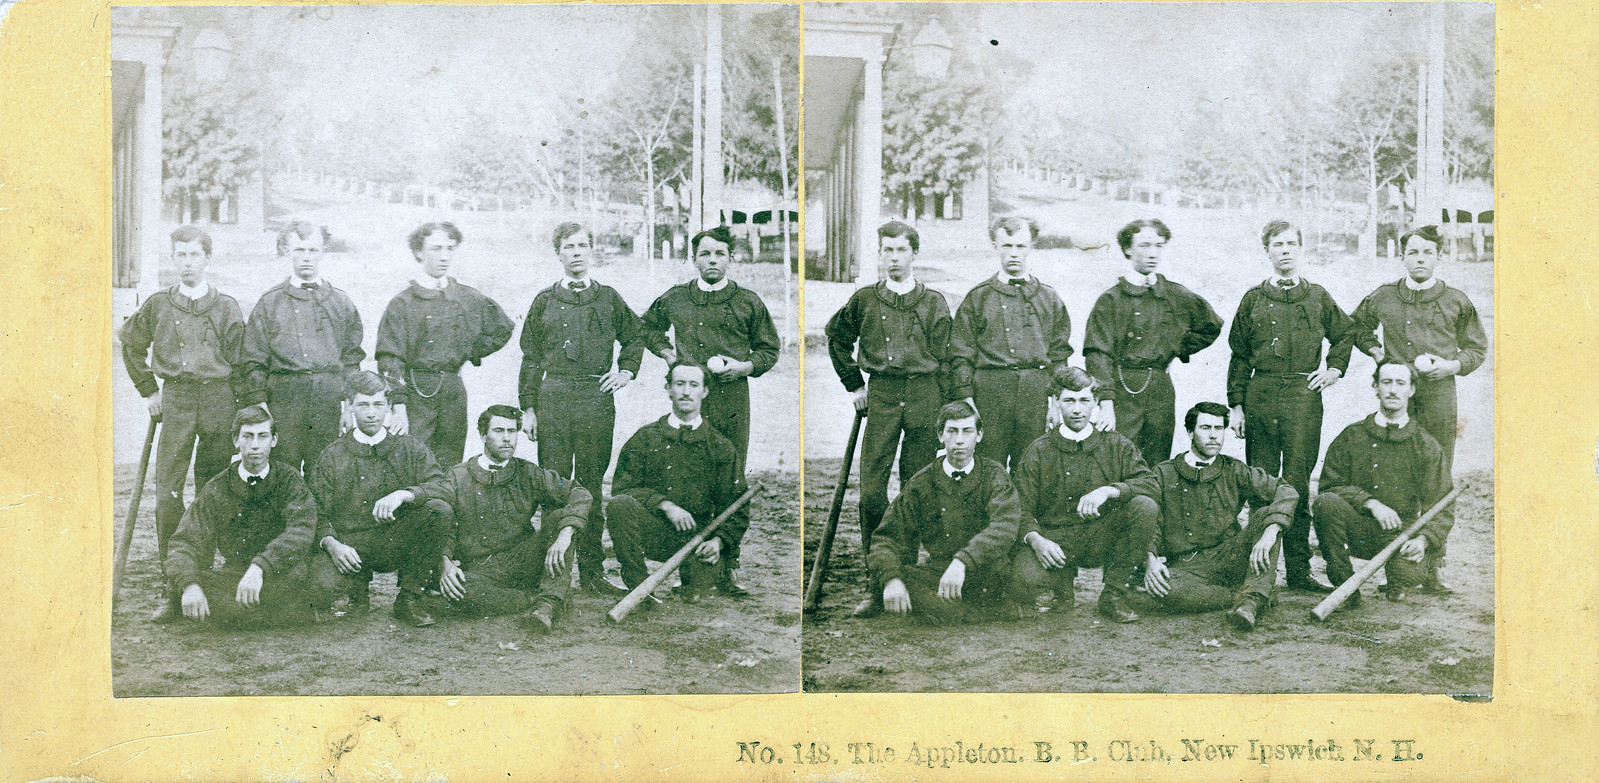 The Appleton Baseball Club